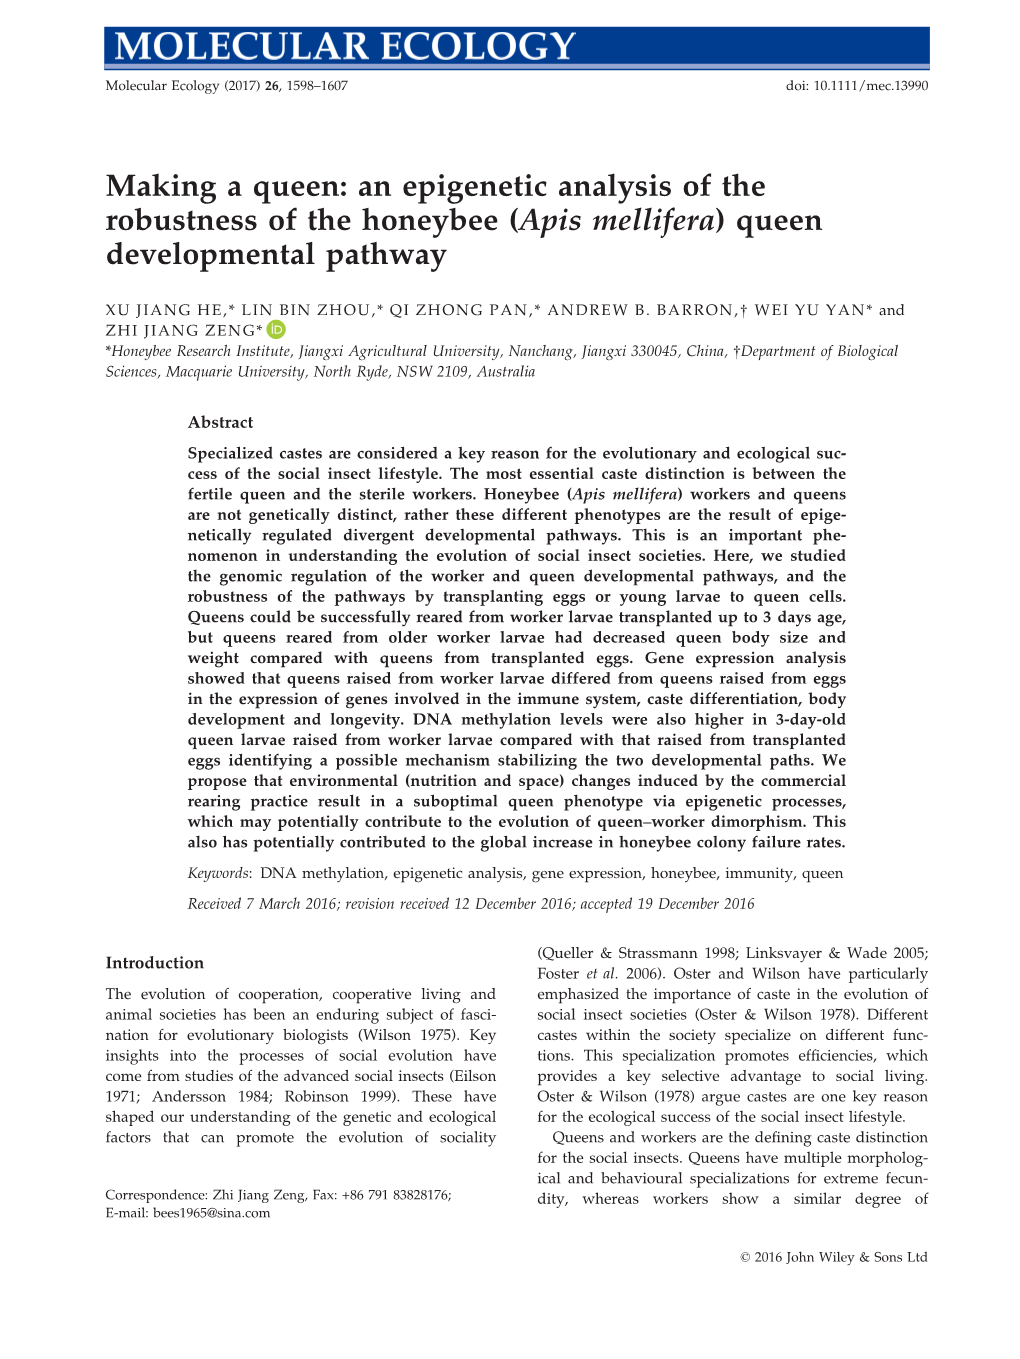 An Epigenetic Analysis of the Robustness of the Honeybee (Apis Mellifera) Queen Developmental Pathway